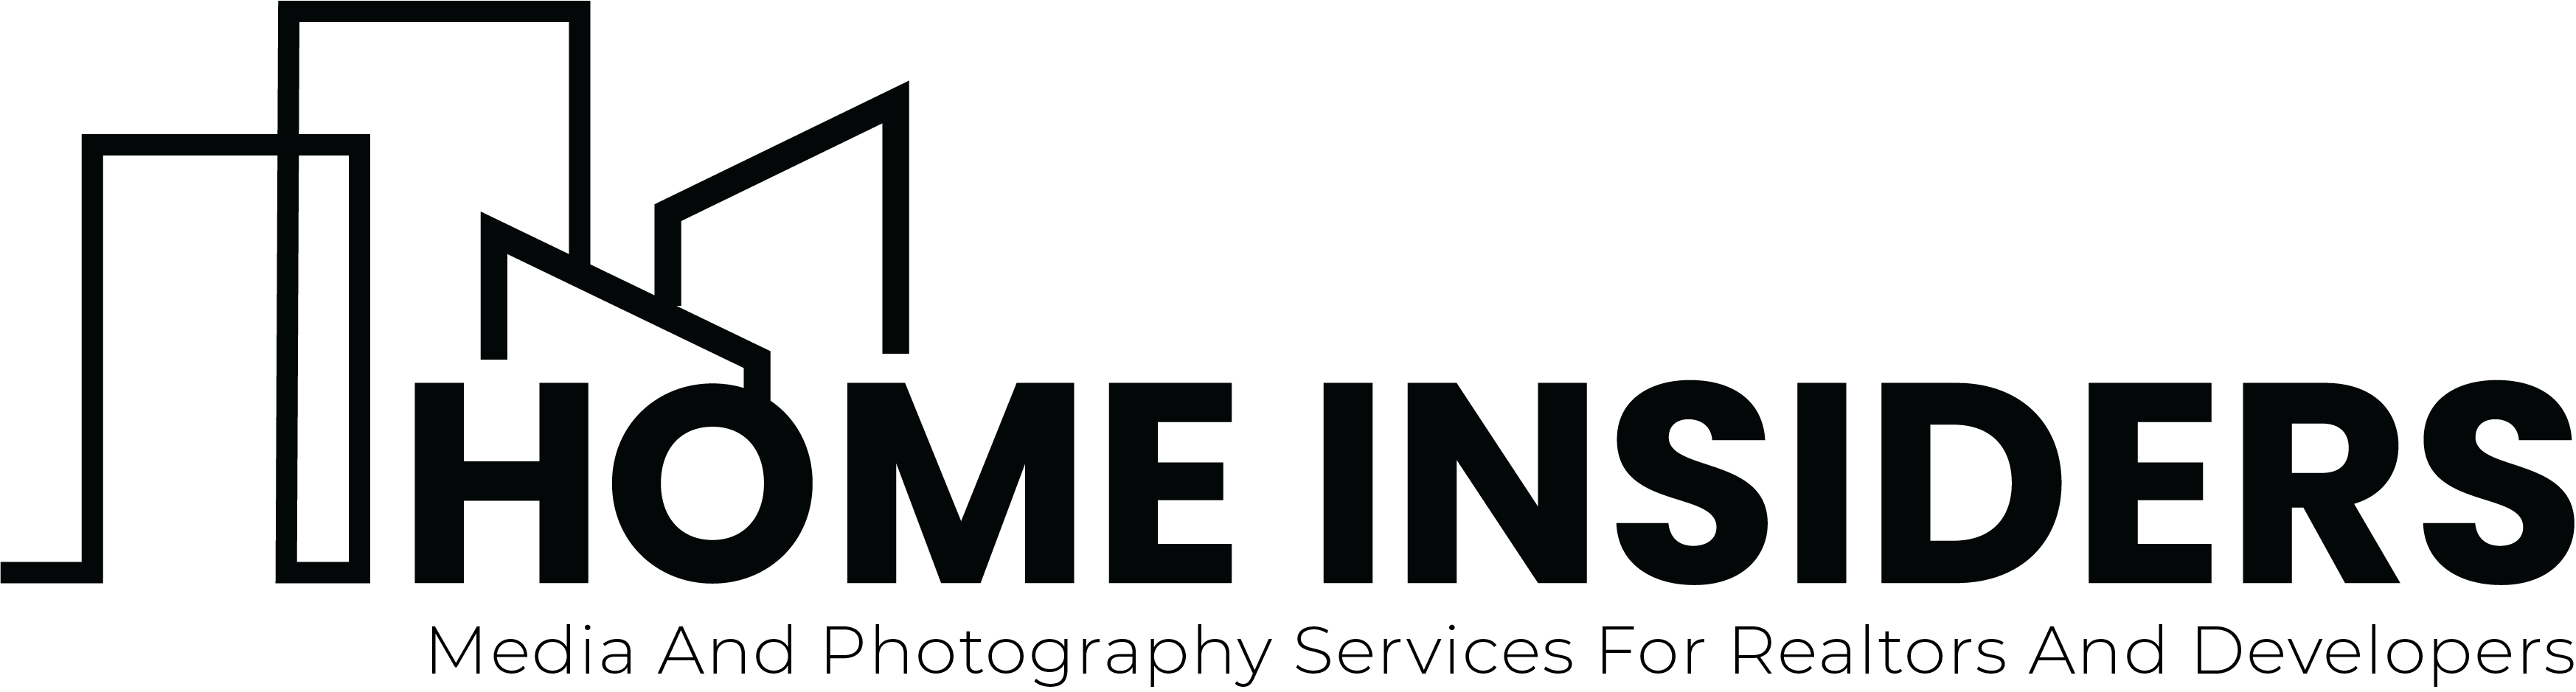 Home Insiders logo